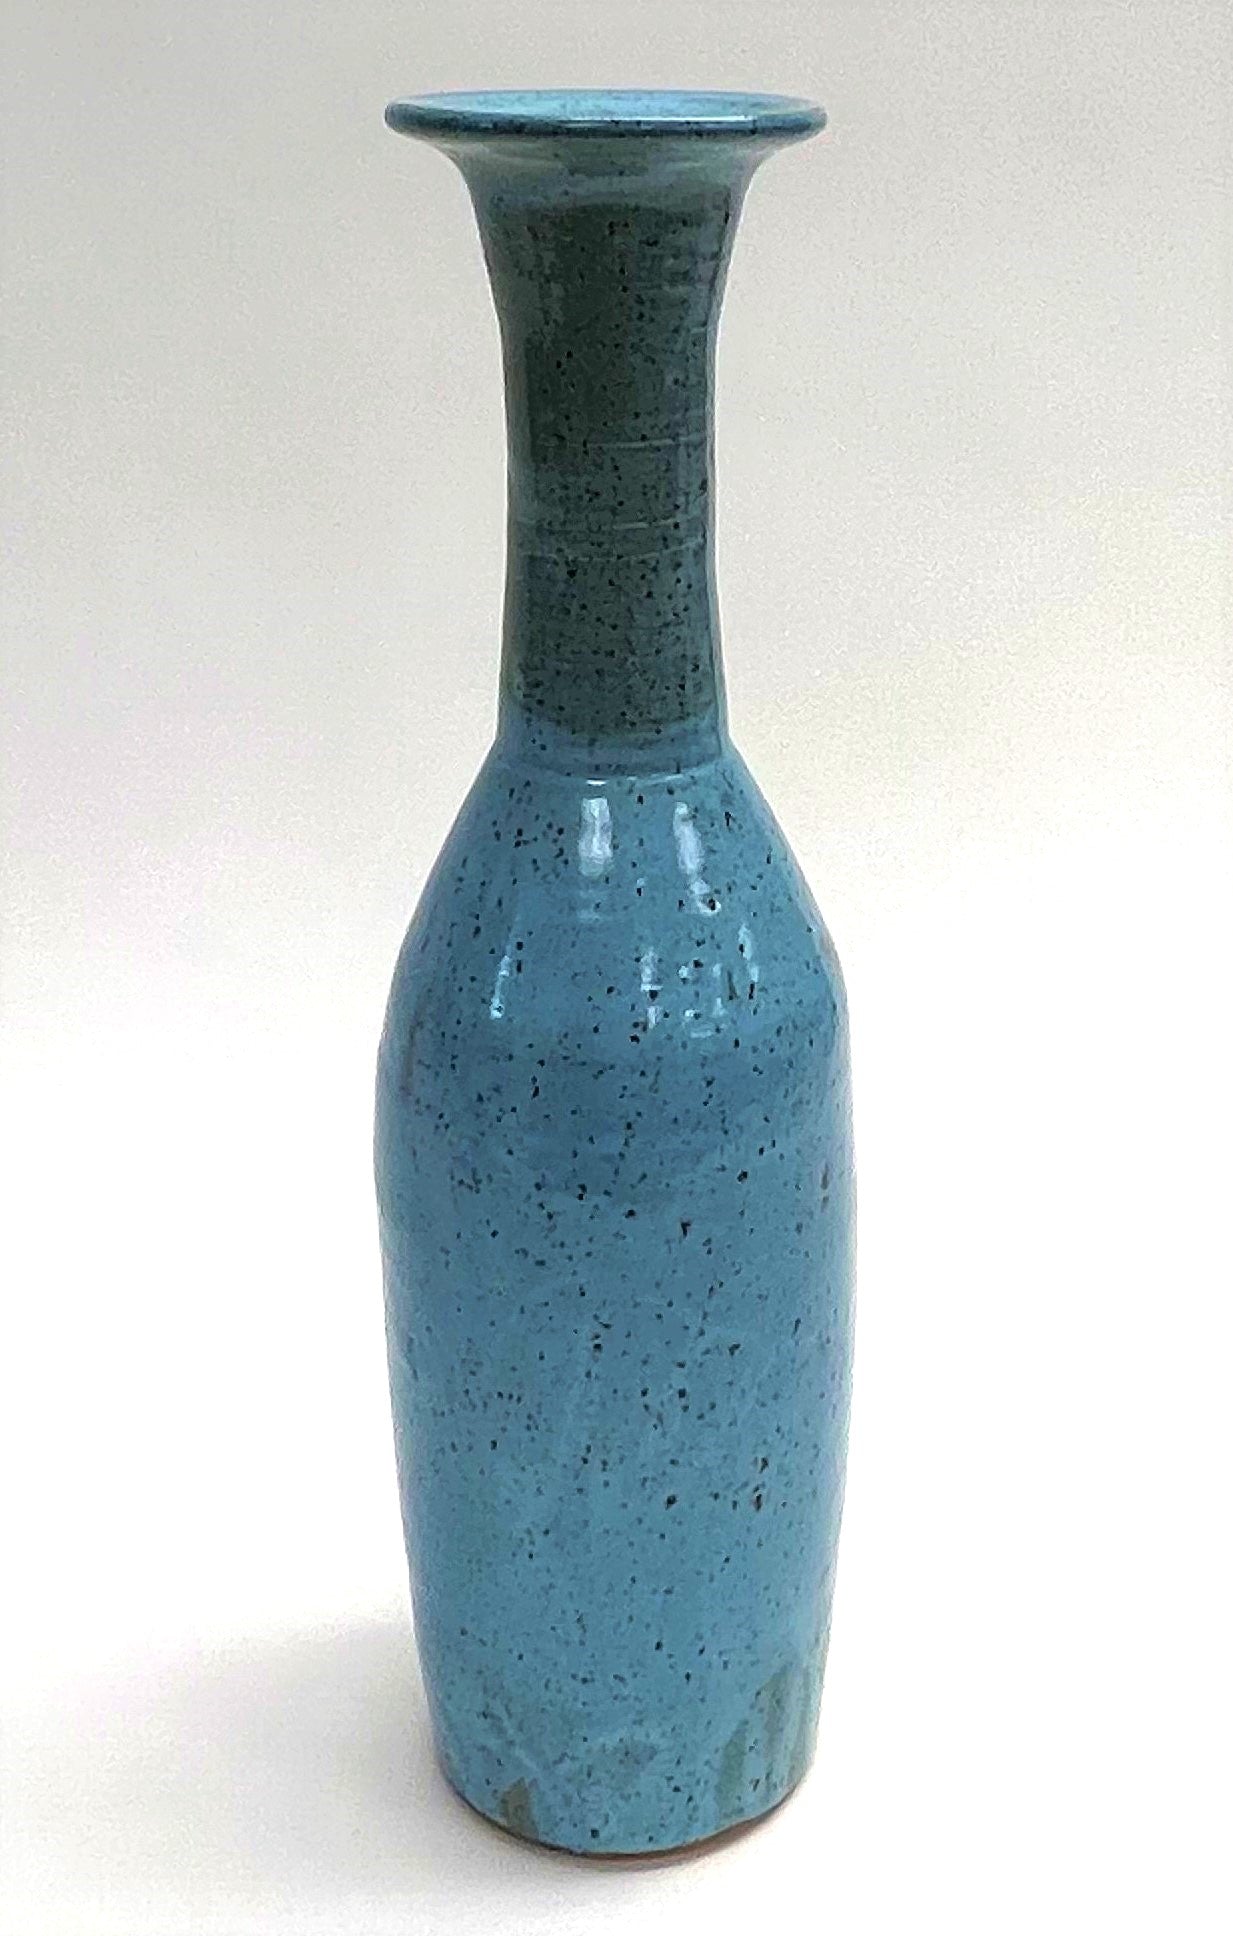 Tall Turquoise Bottle Vase